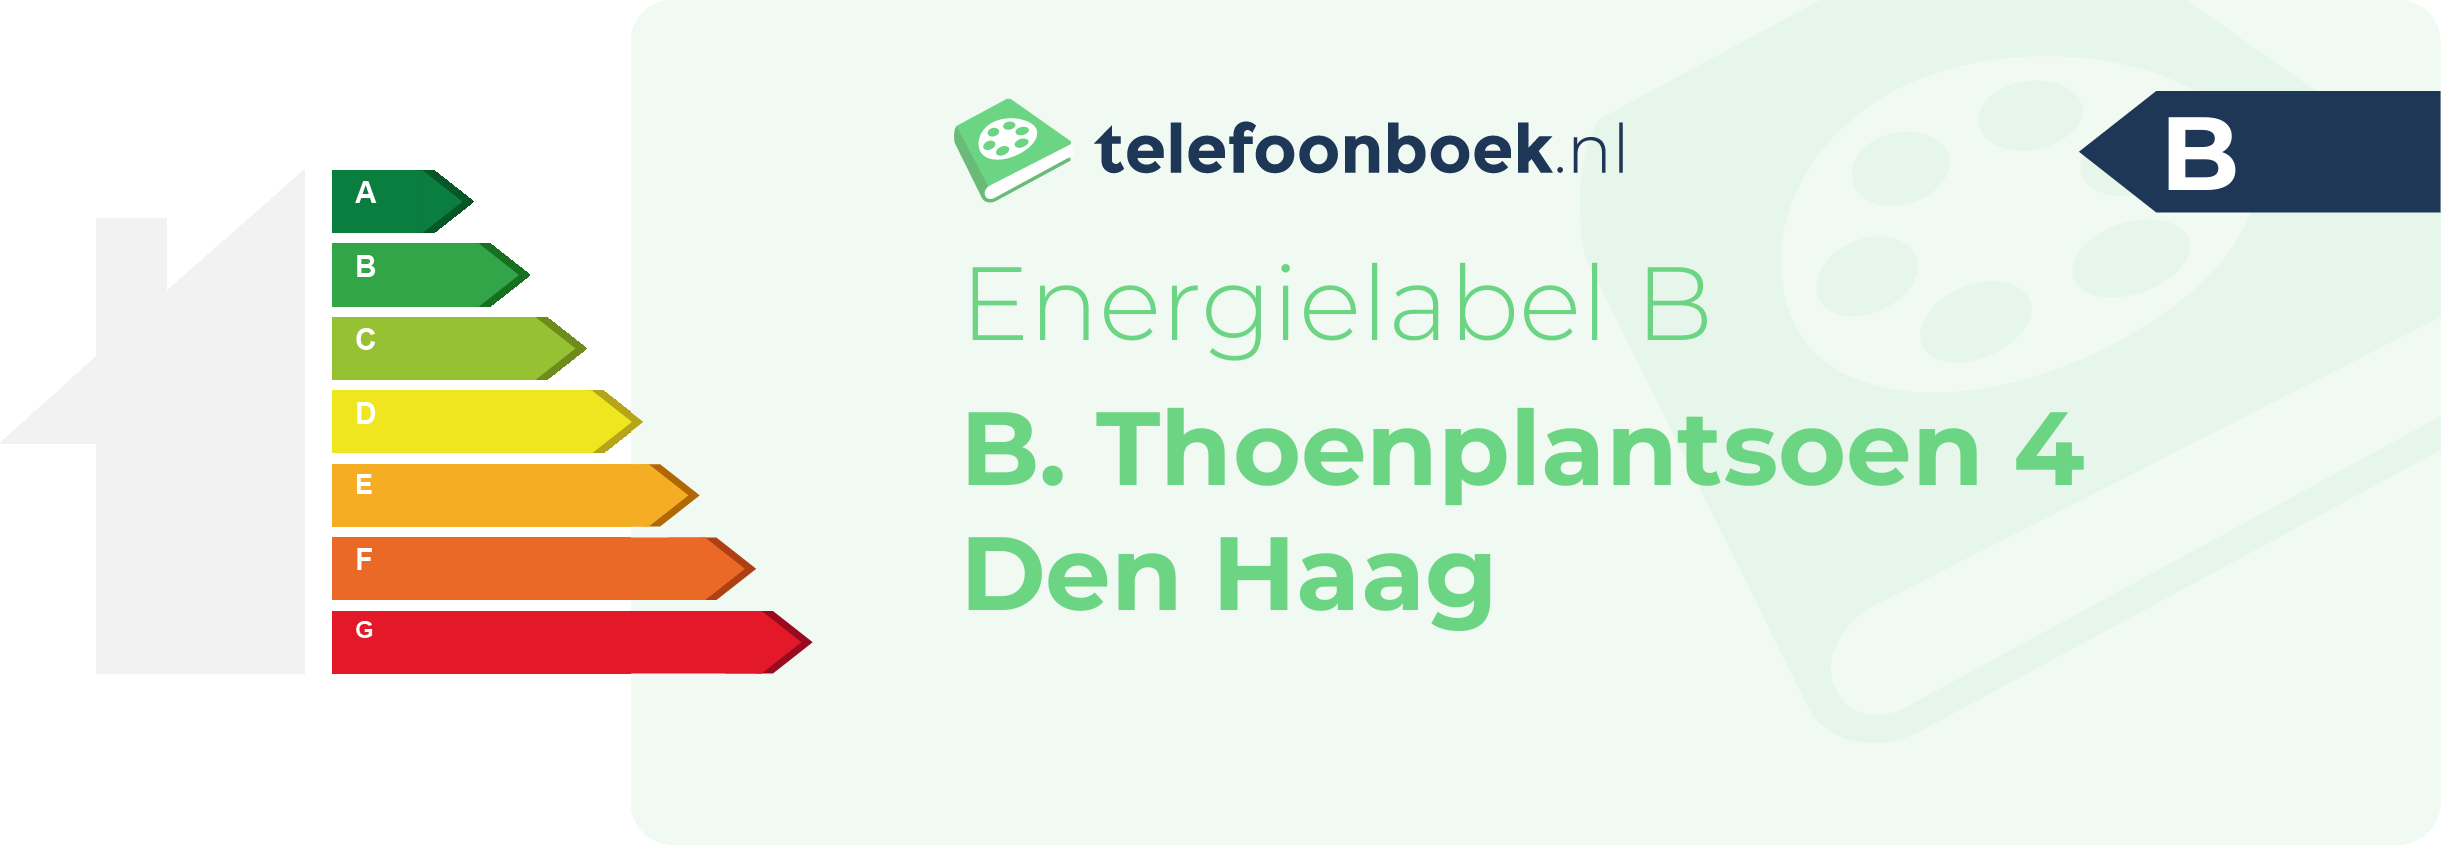 Energielabel B. Thoenplantsoen 4 Den Haag